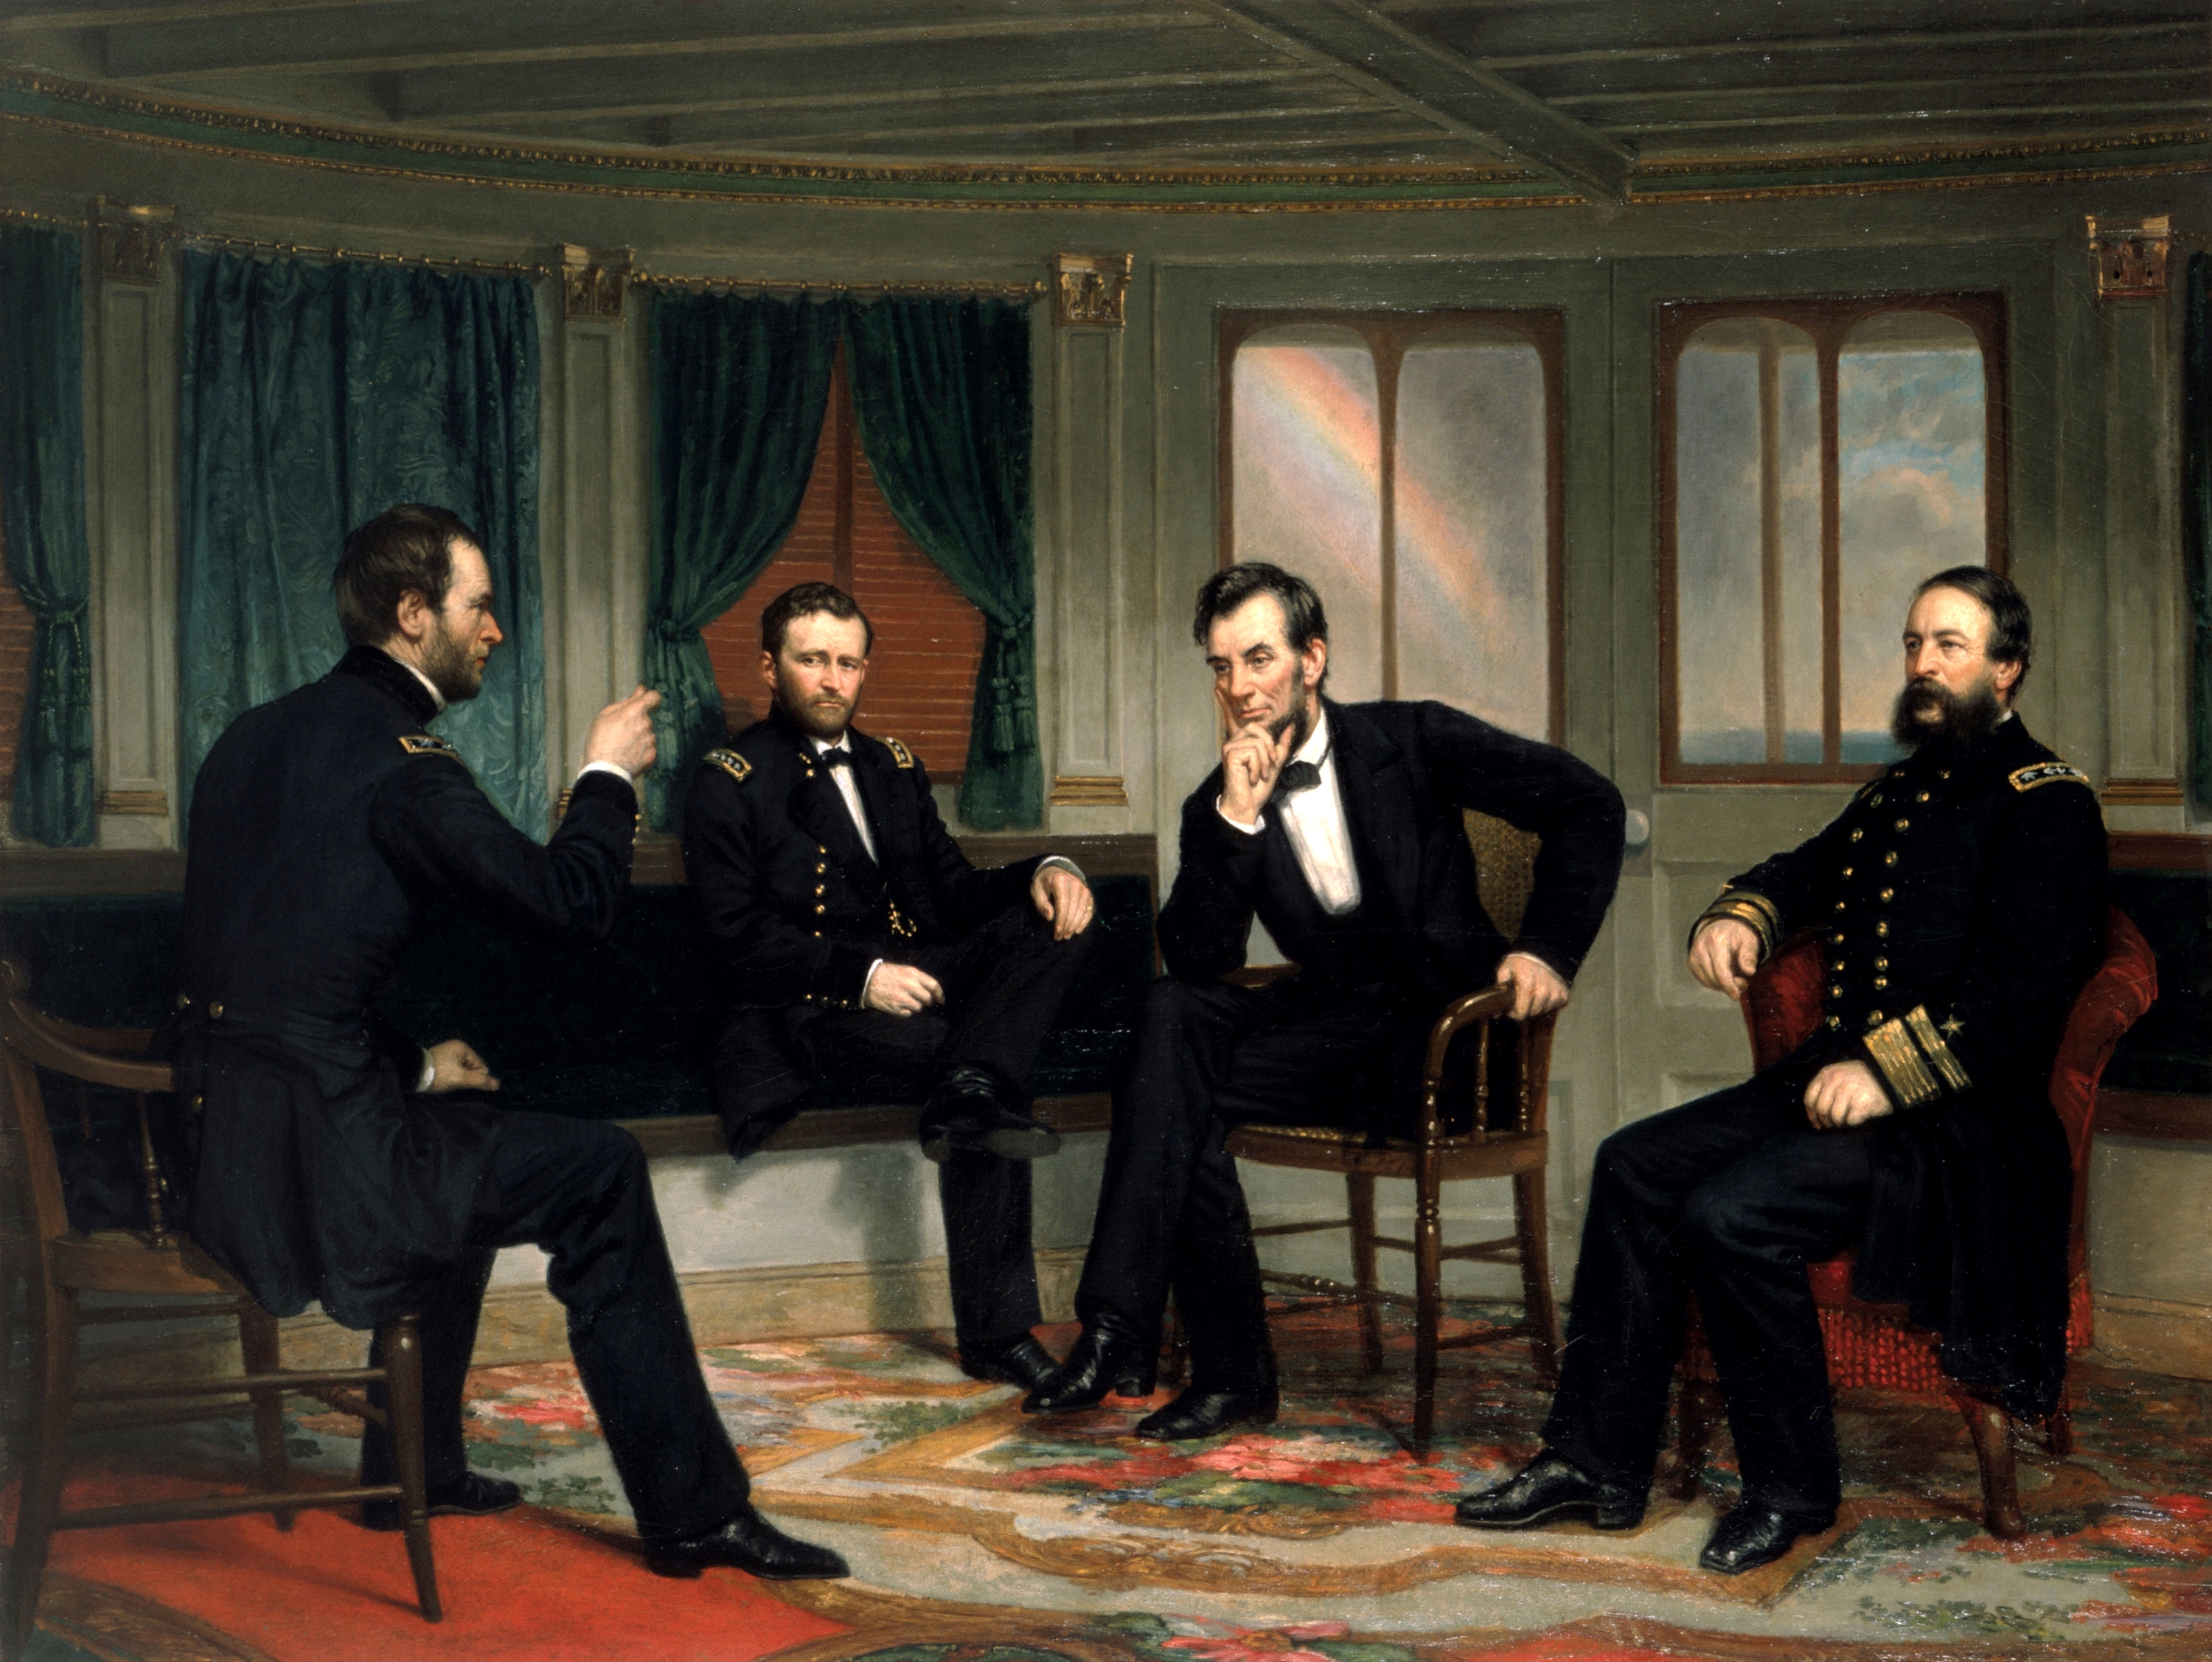 Ulysses S. Grant - Wikipedia, the free encyclopedia